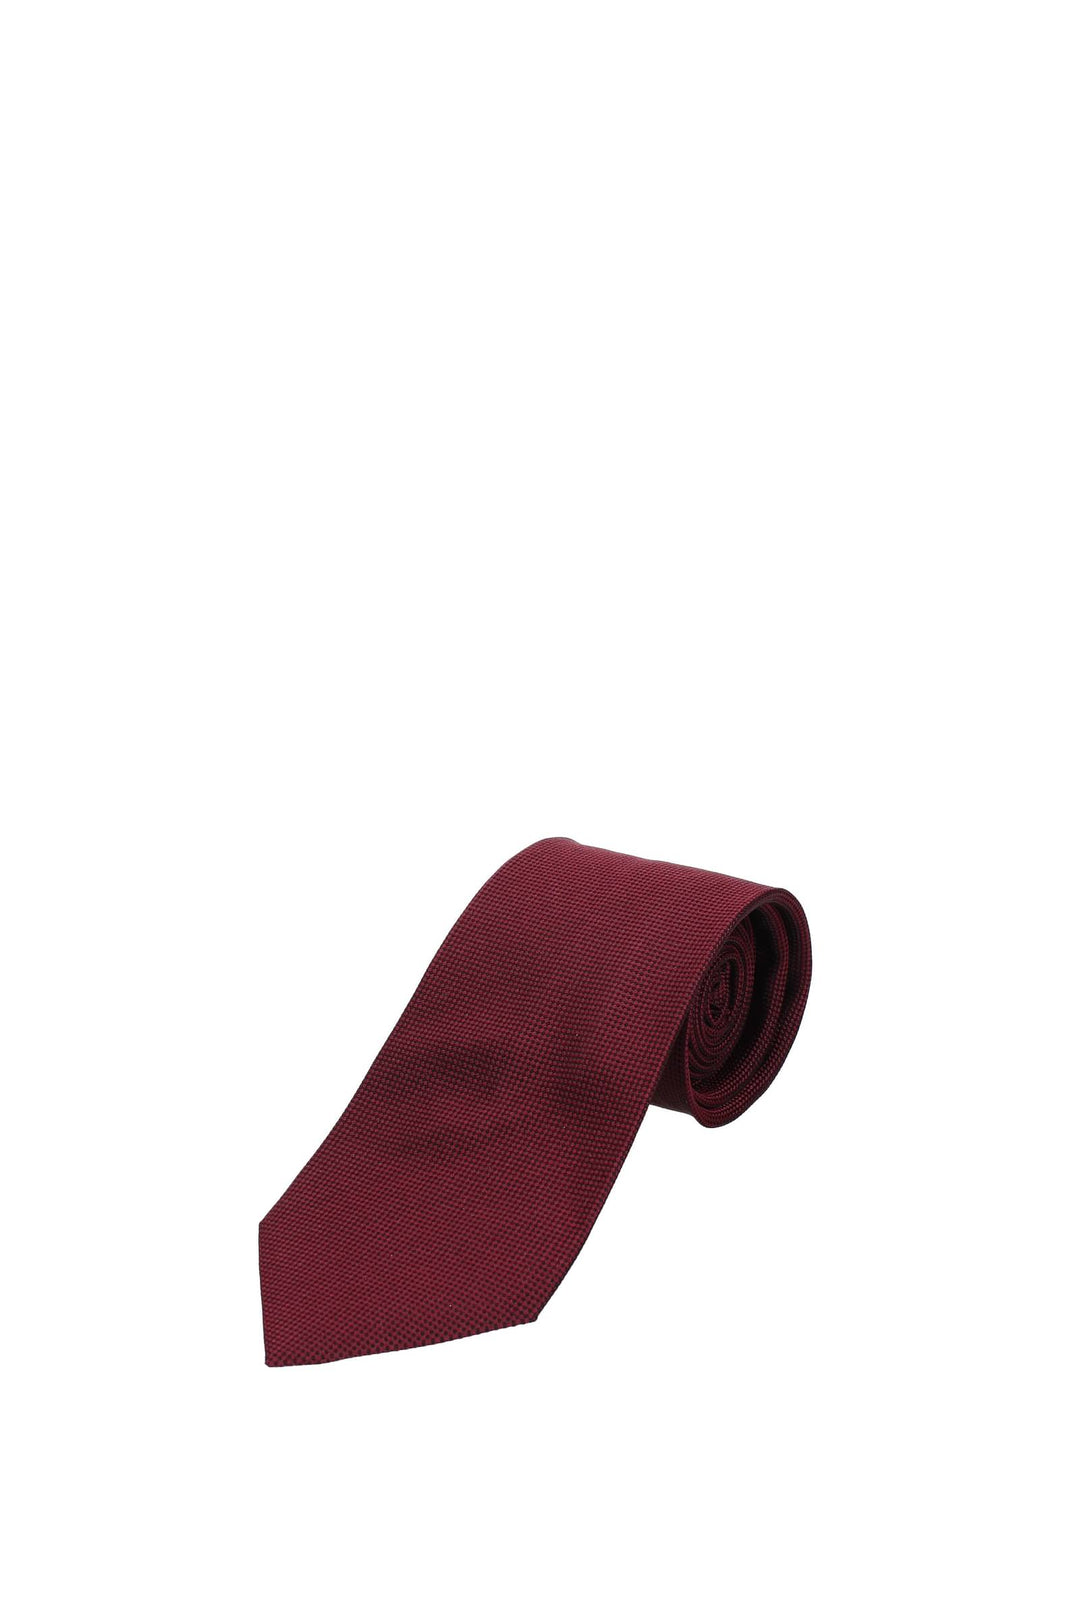 Cravatte Seta Rosso Bordeaux - Zegna - Uomo